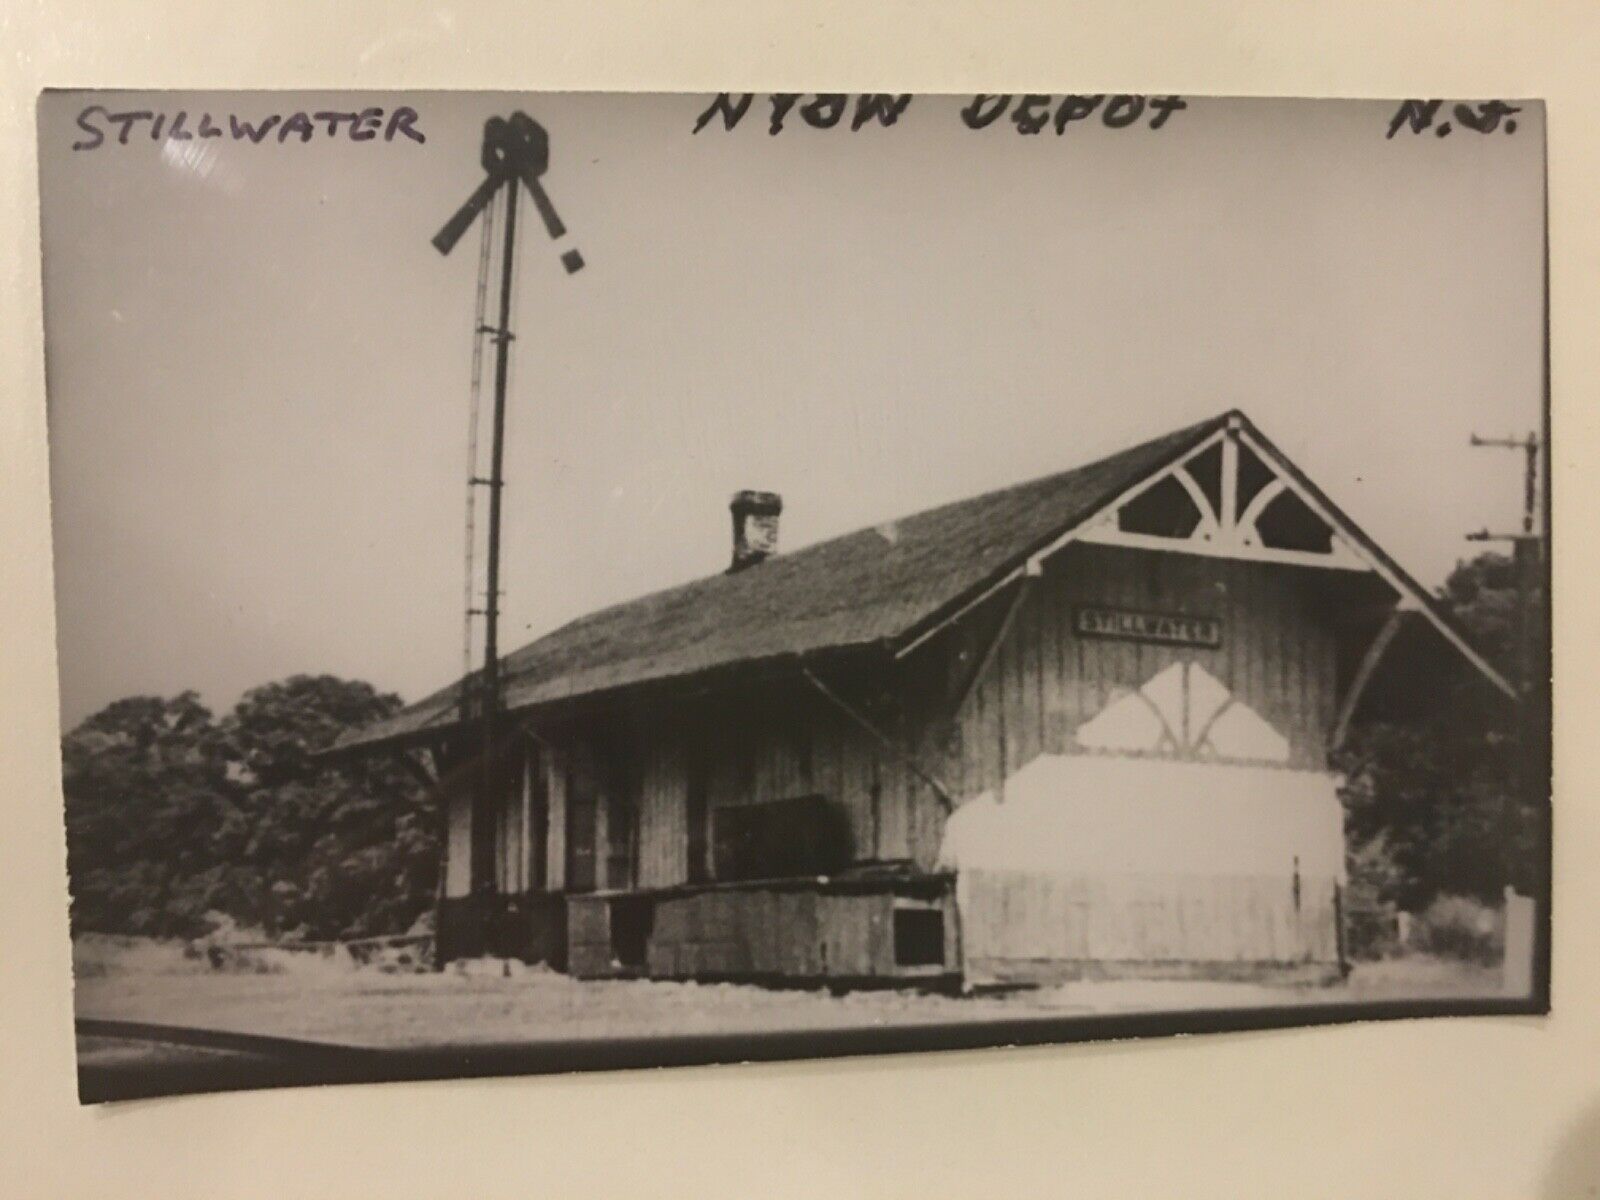 Stillwater - NYSW Railroad Station